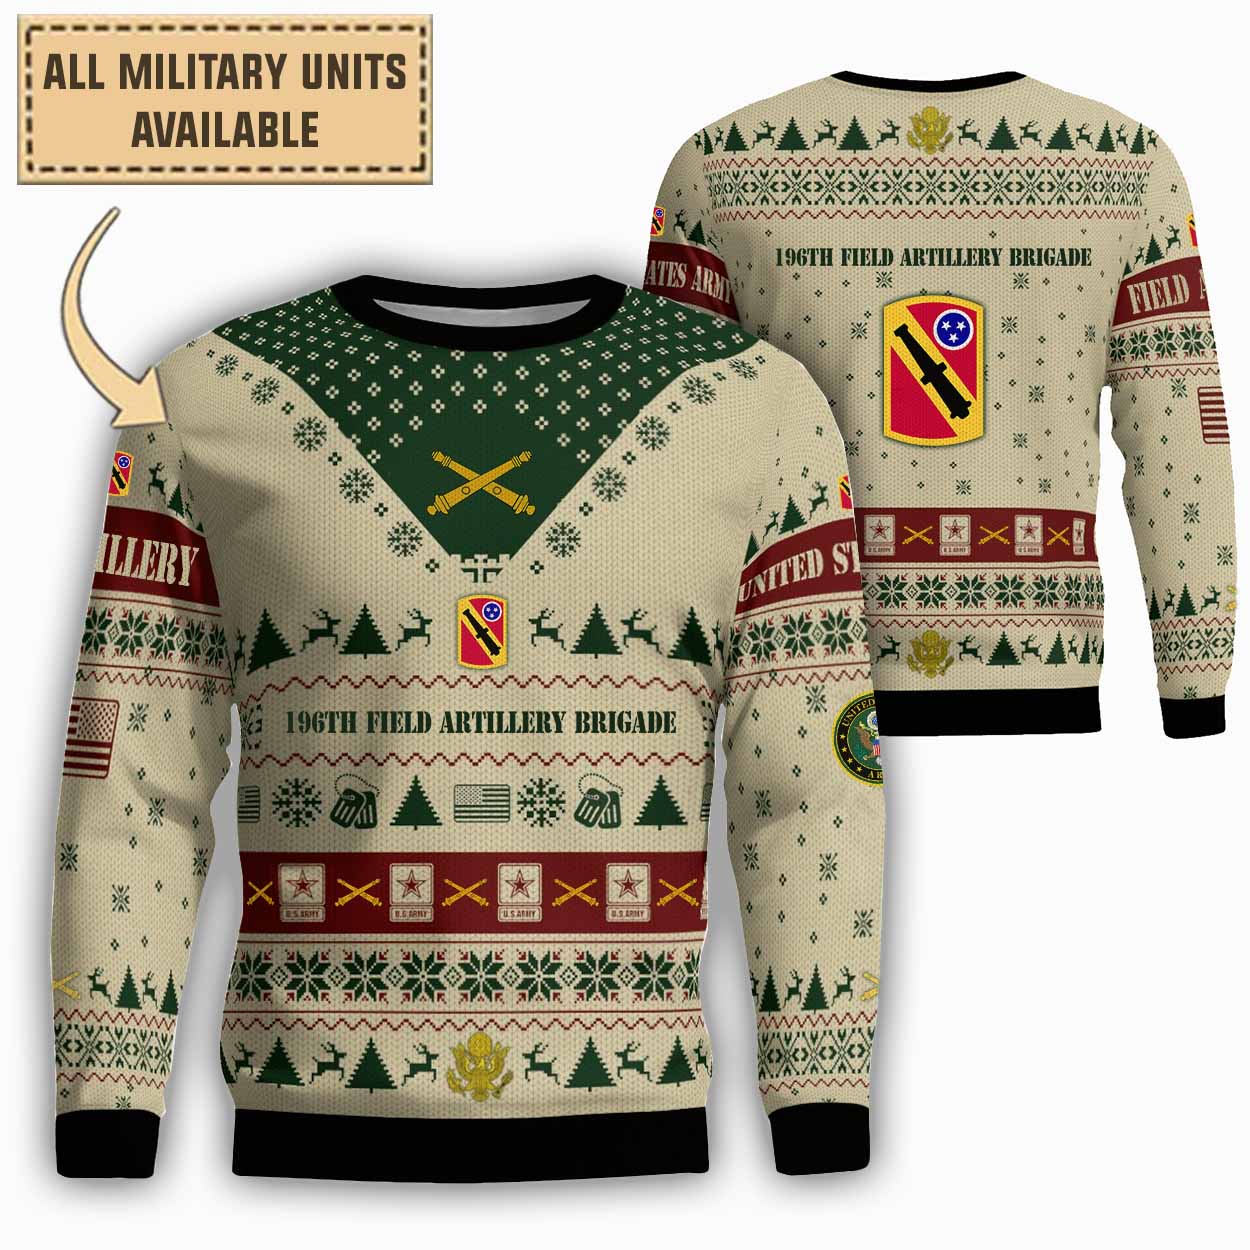 196th fa bde 196th field artillery brigadelightweight sweater